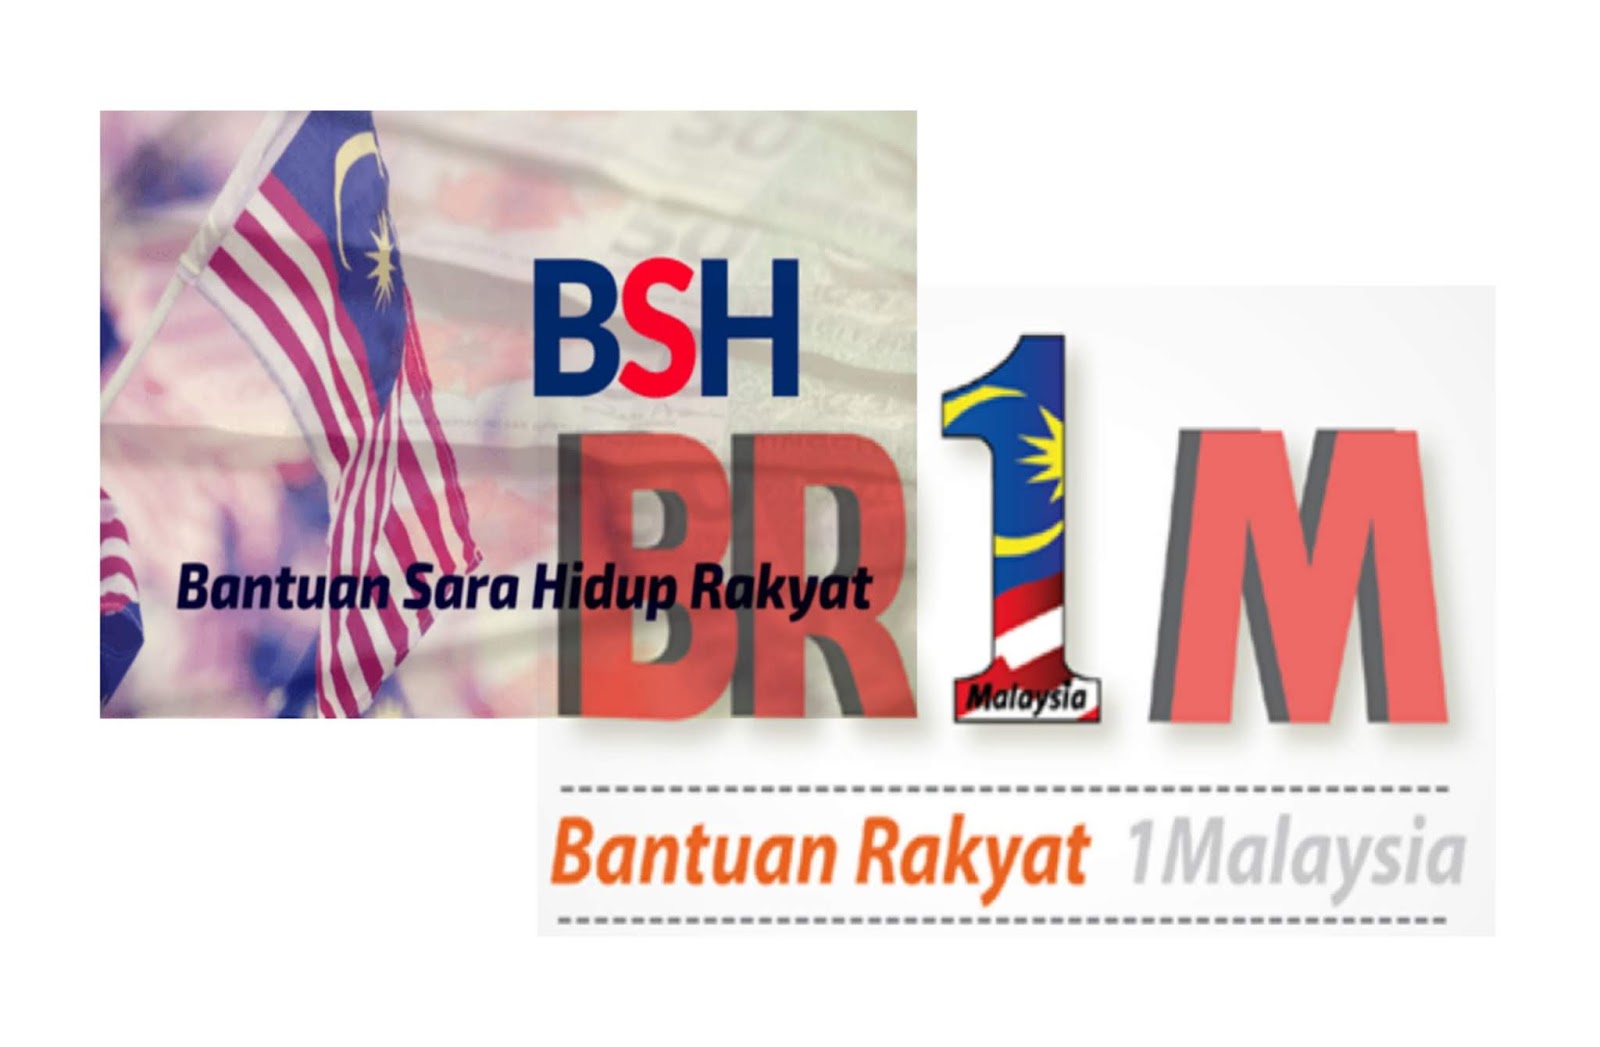 BR1M/BSH: Is DAP sabotaging PPBM's Semenyih campaign 